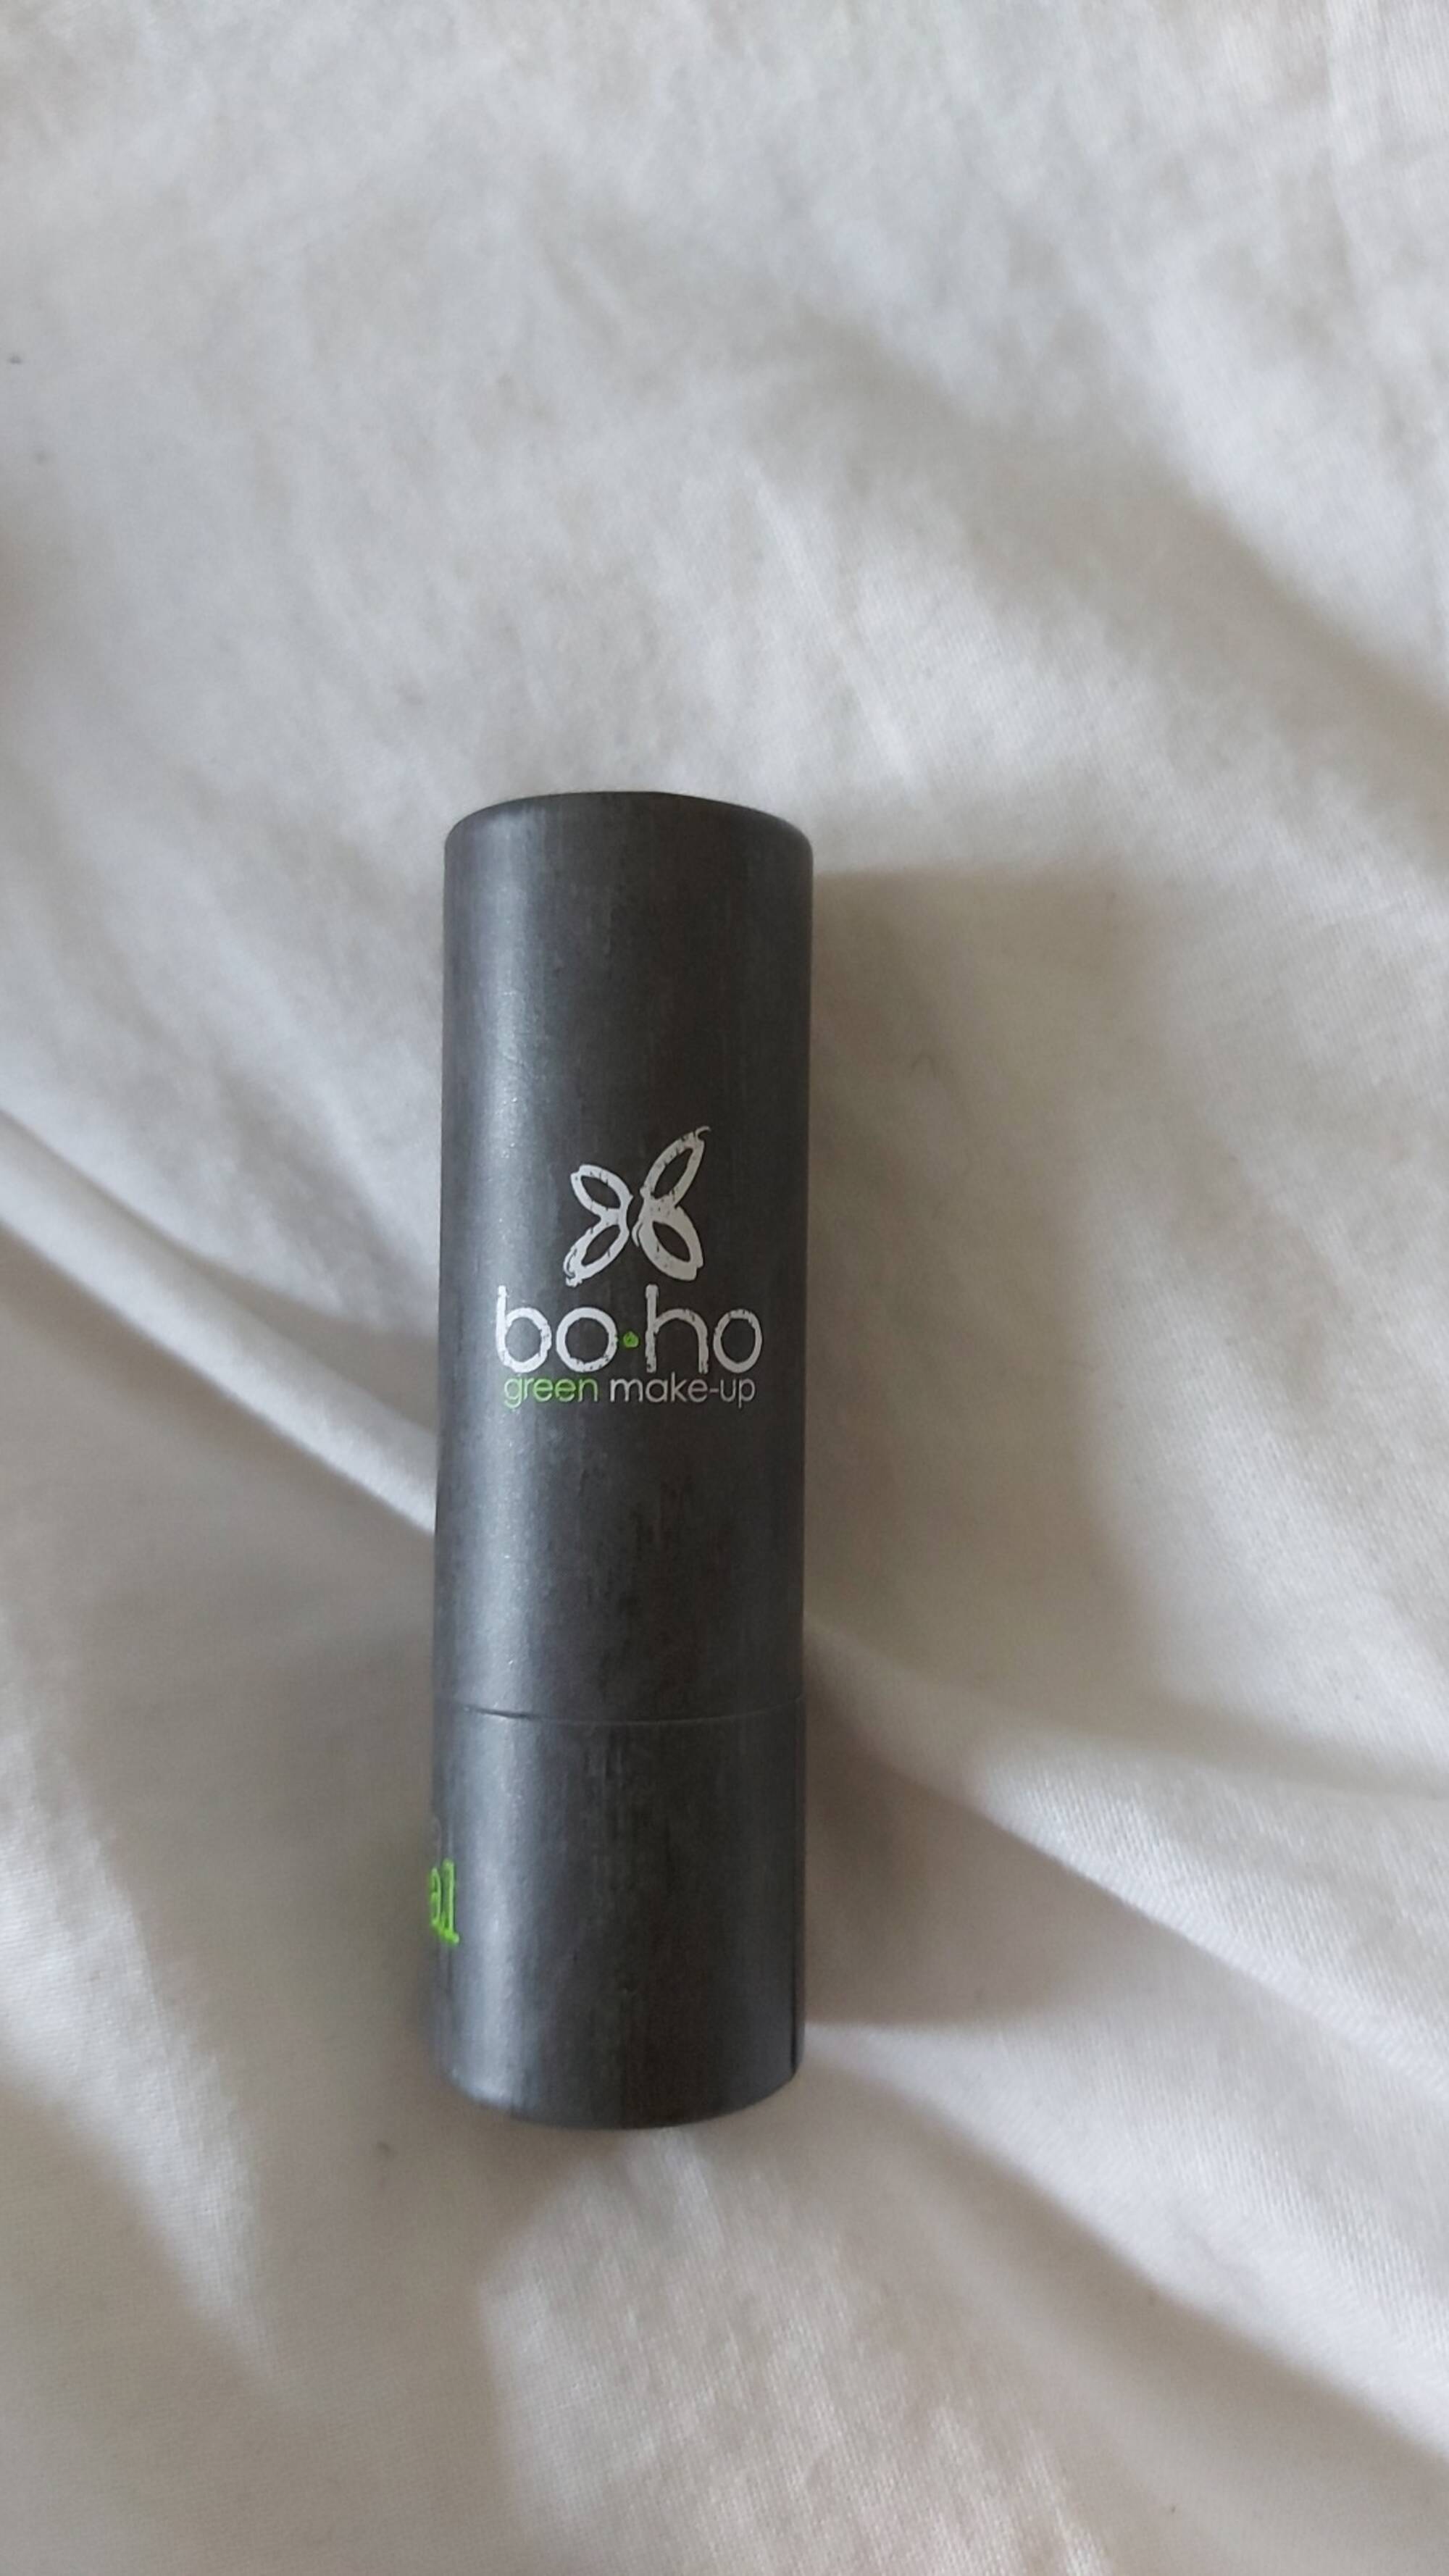 BOHO - Green make-up